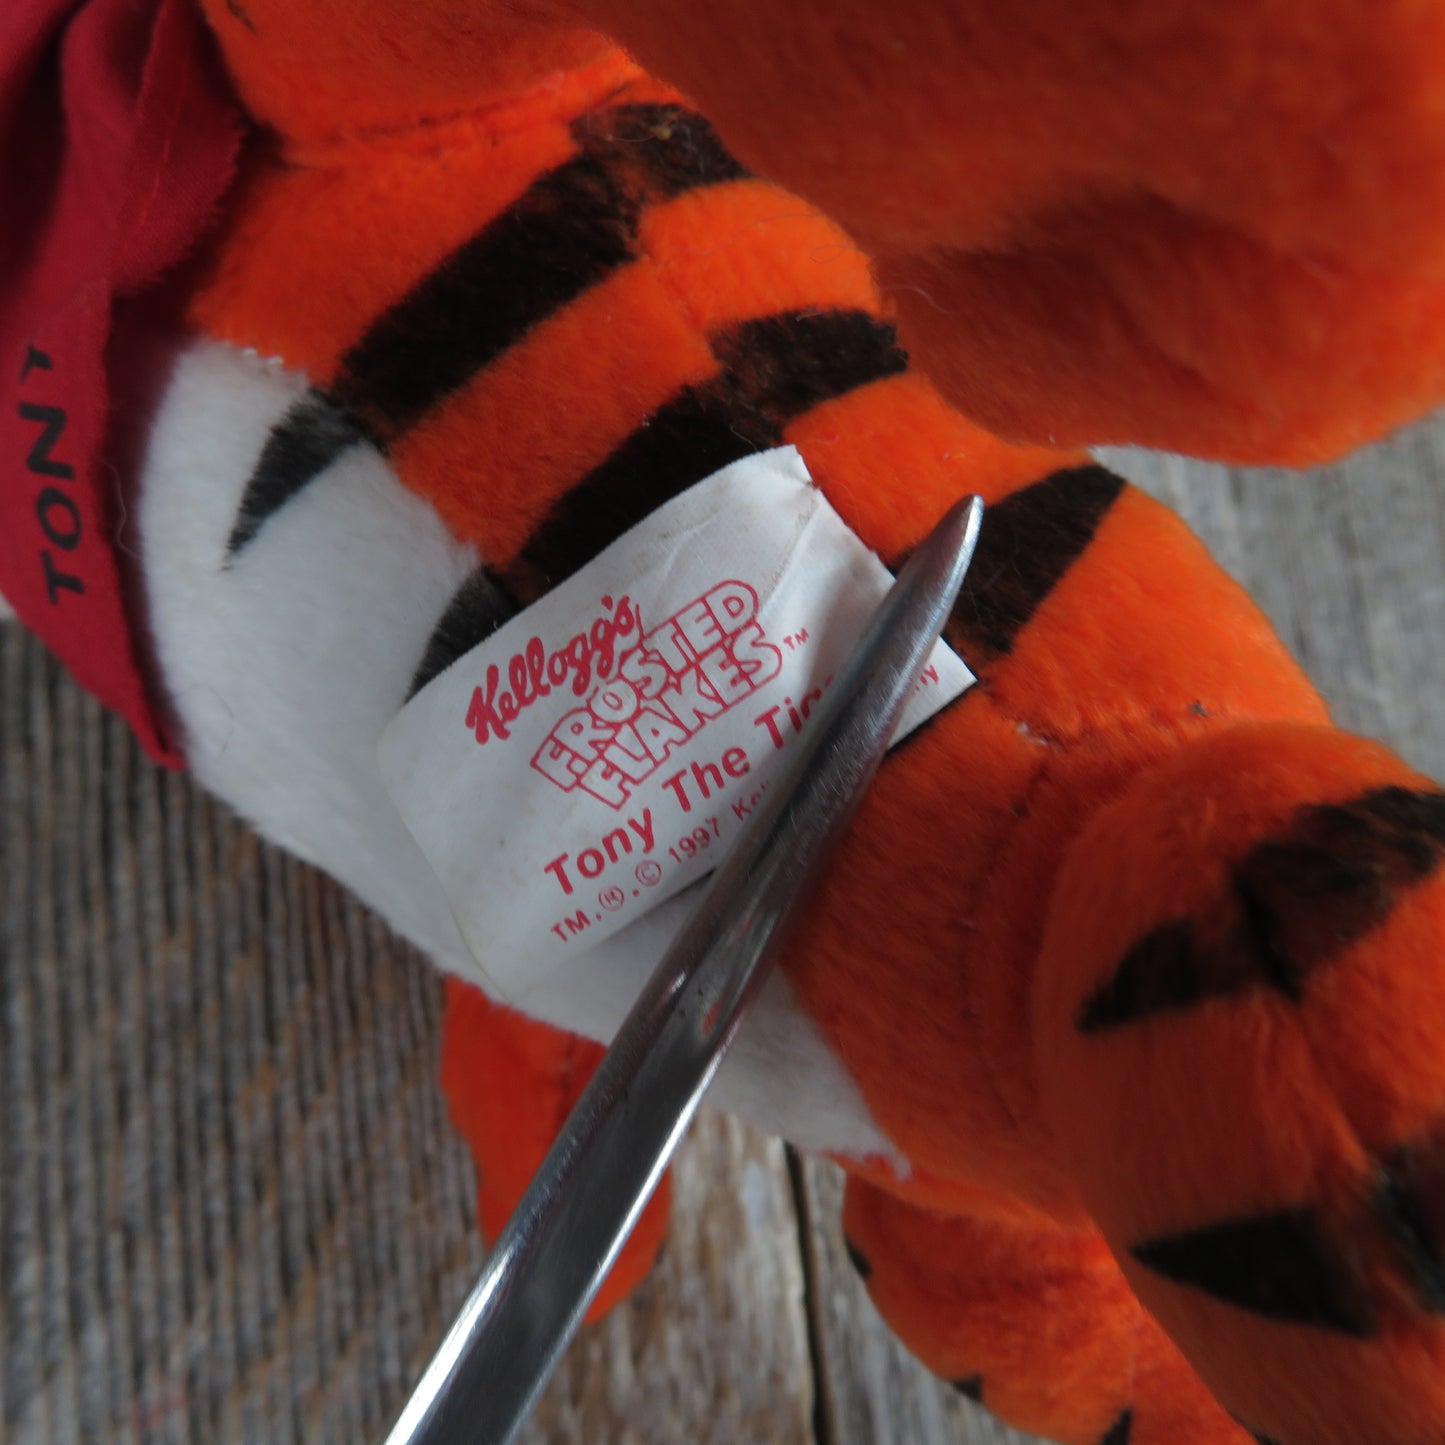 Vintage Tony the Tiger Plush Kellogg's Frosted Flakes Mascot Jointed Stuffed Animal Orange Black 1997 - At Grandma's Table